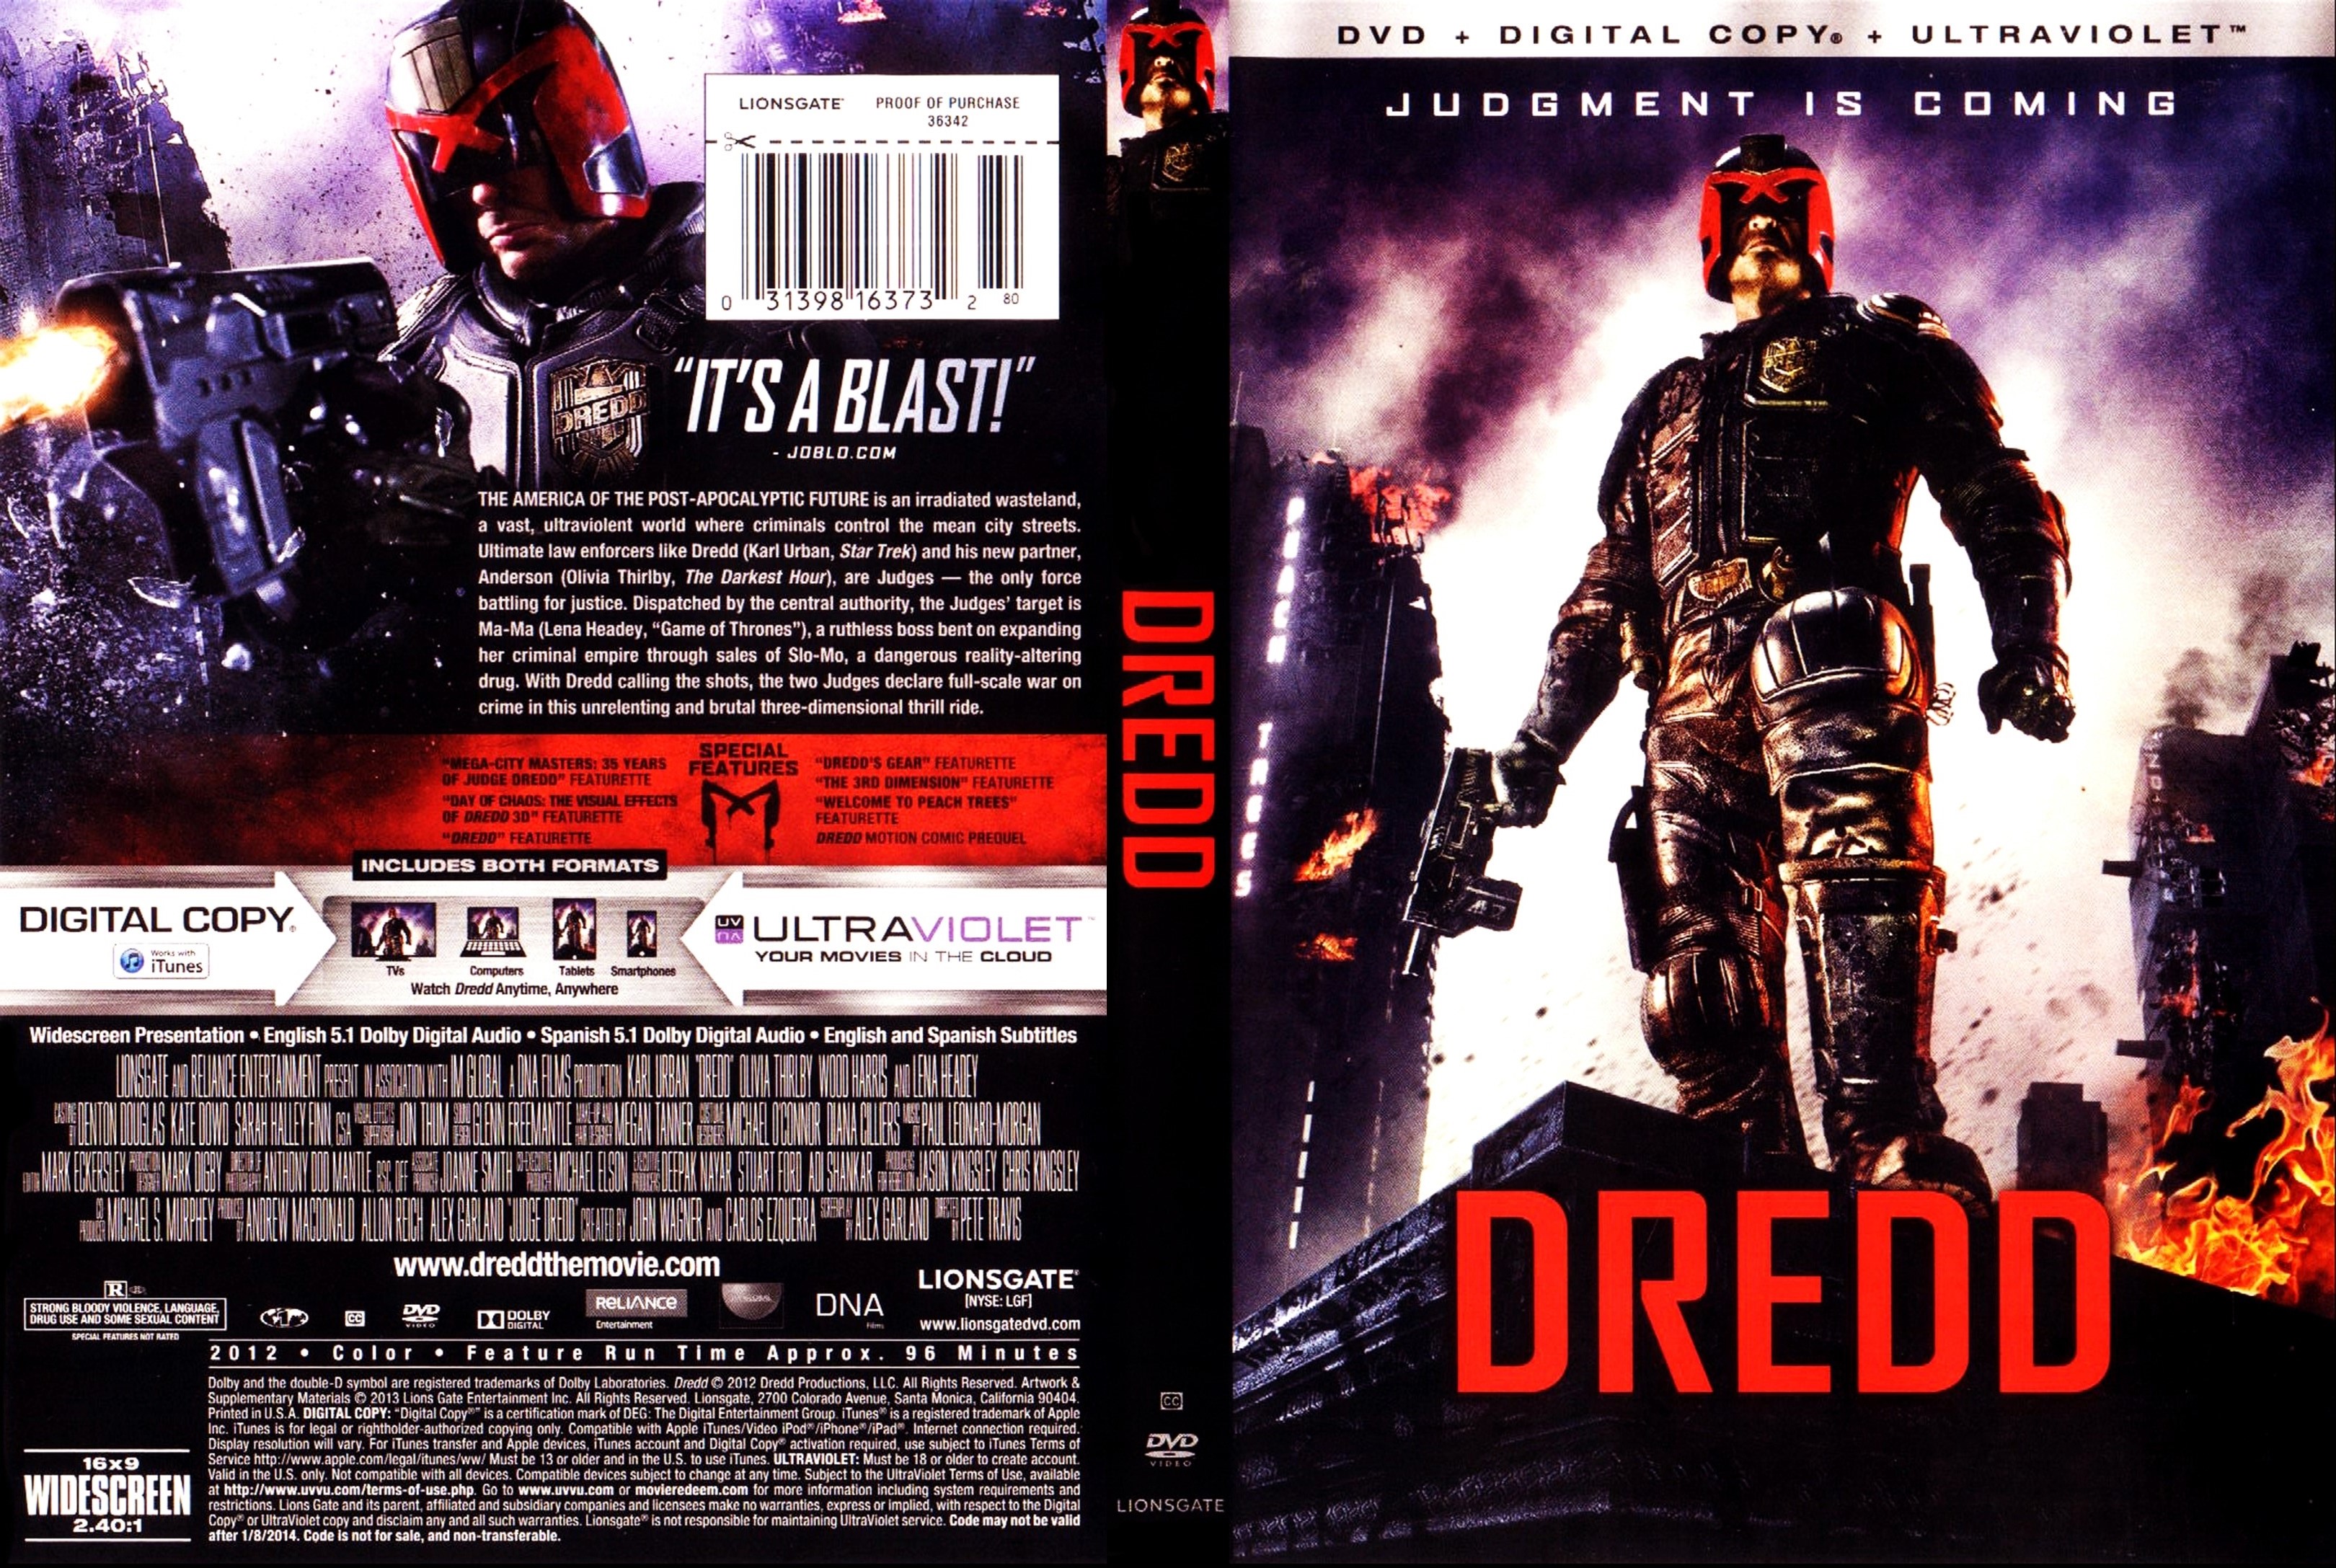 Jaquette DVD Dredd (Canadienne)